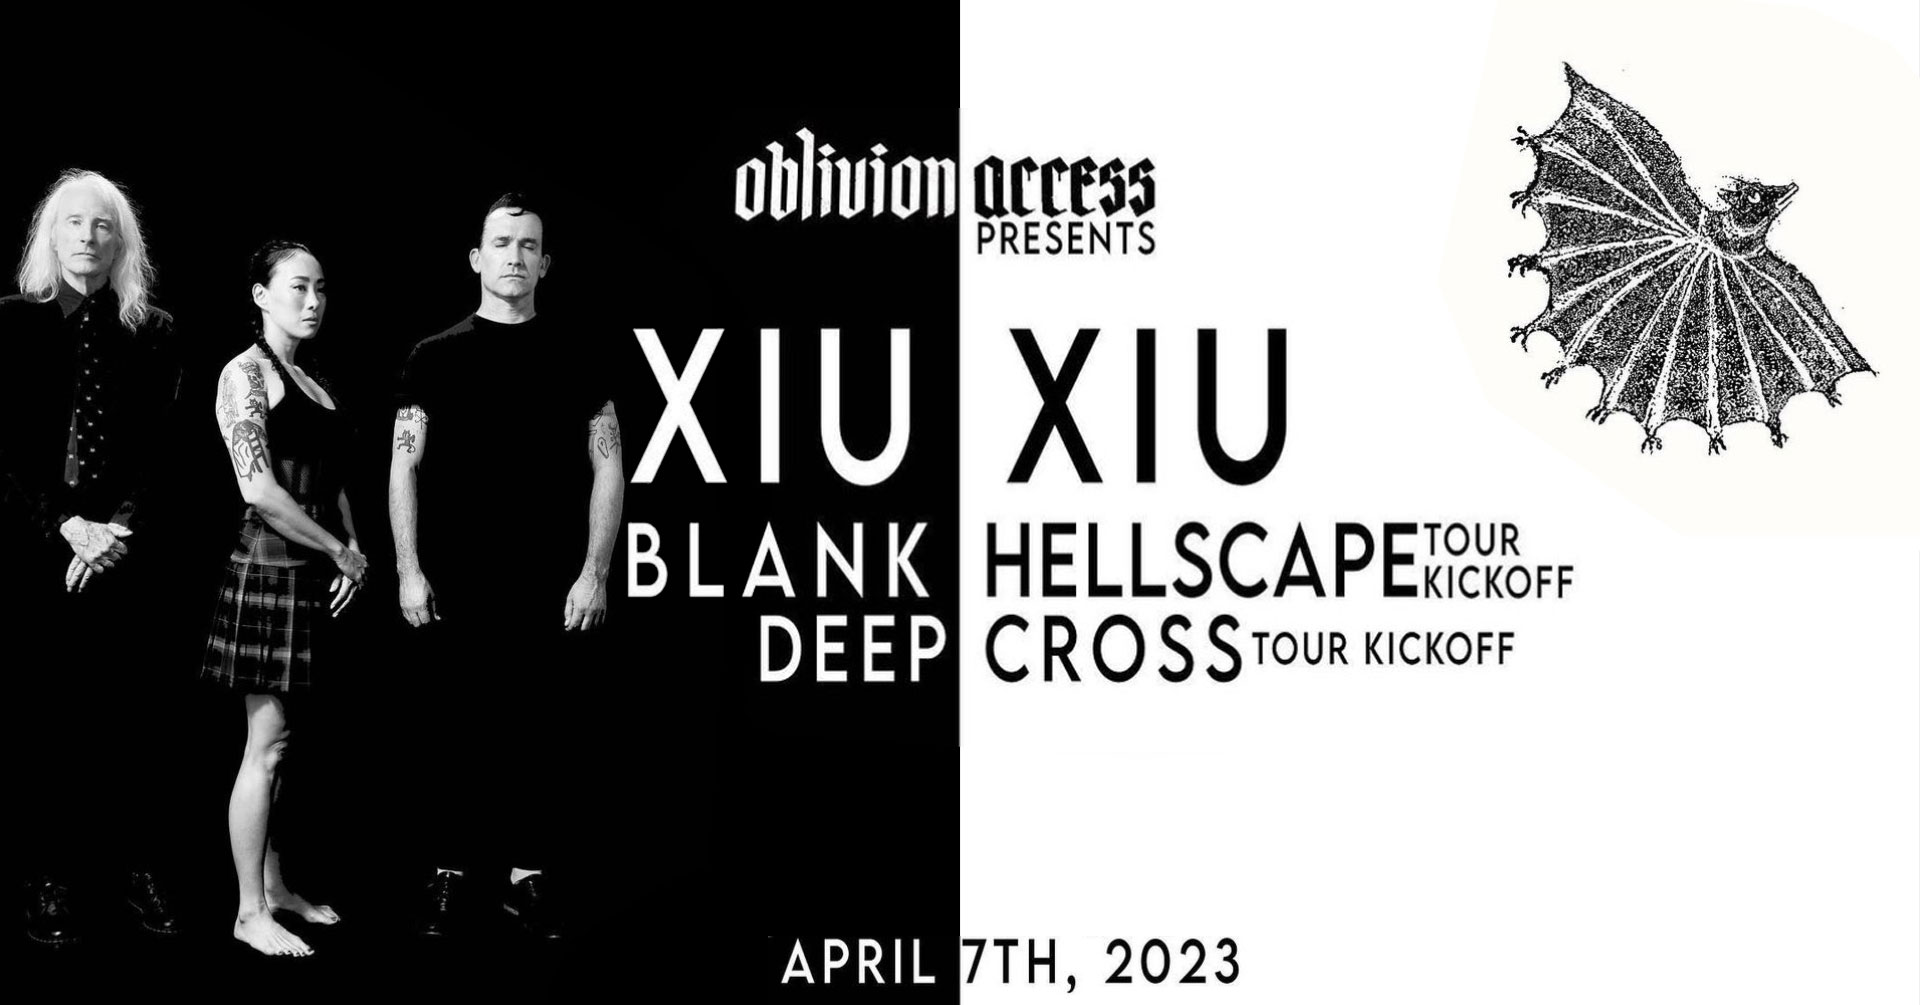 Oblivion Access presents: XIU XIU w/ Blank Hellscape and Deep Cross